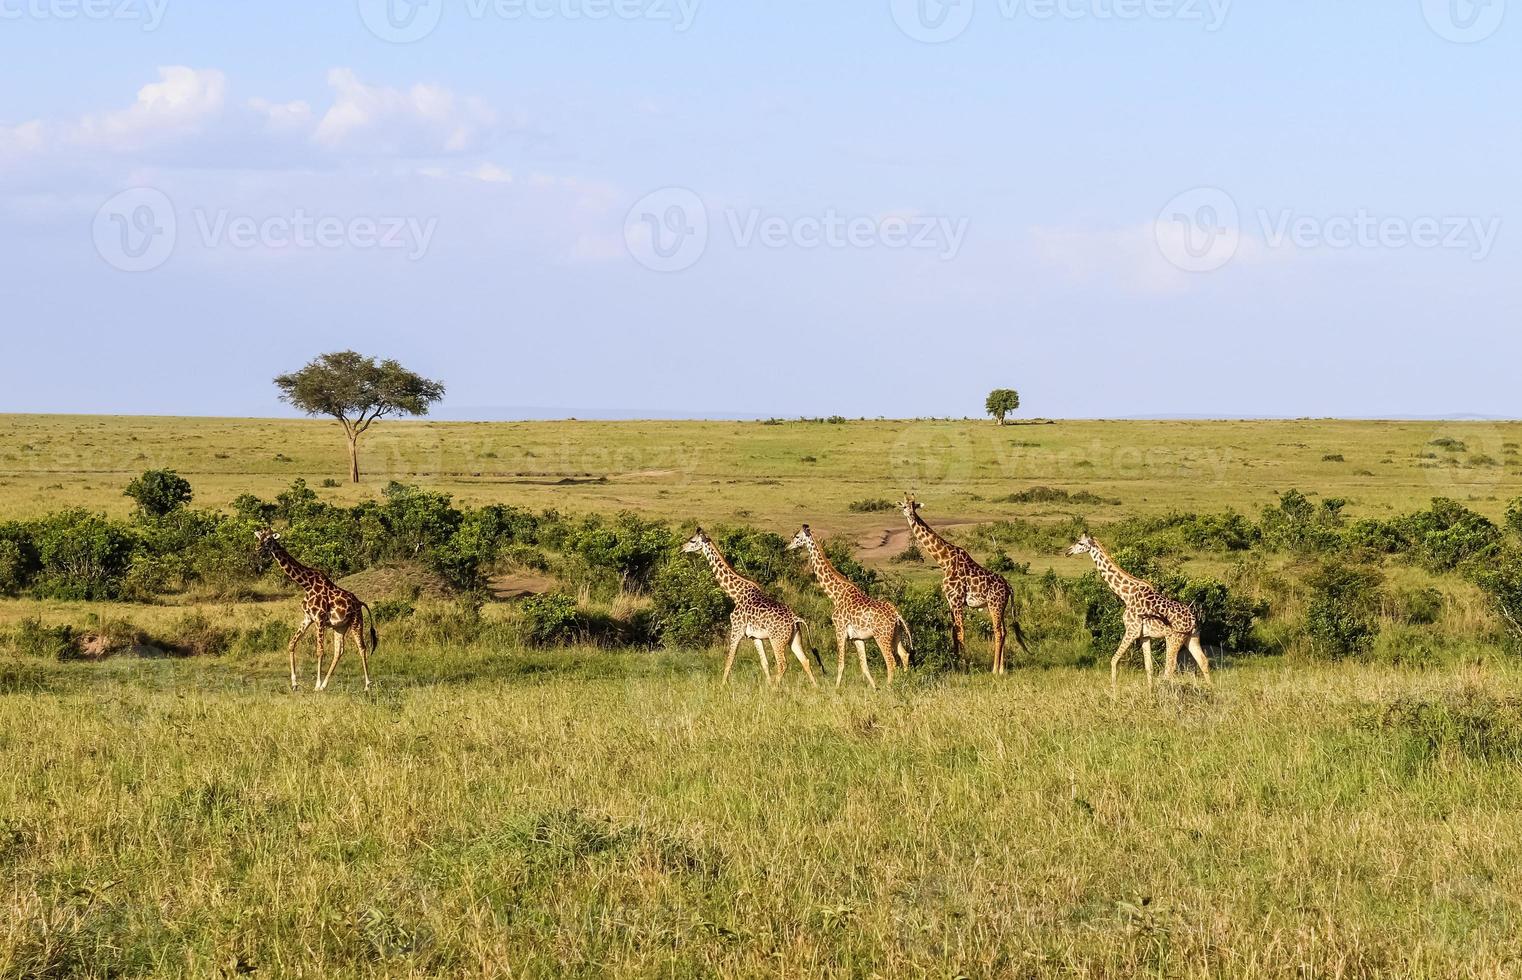 Beautiful giraffe in the wild nature of Africa. photo